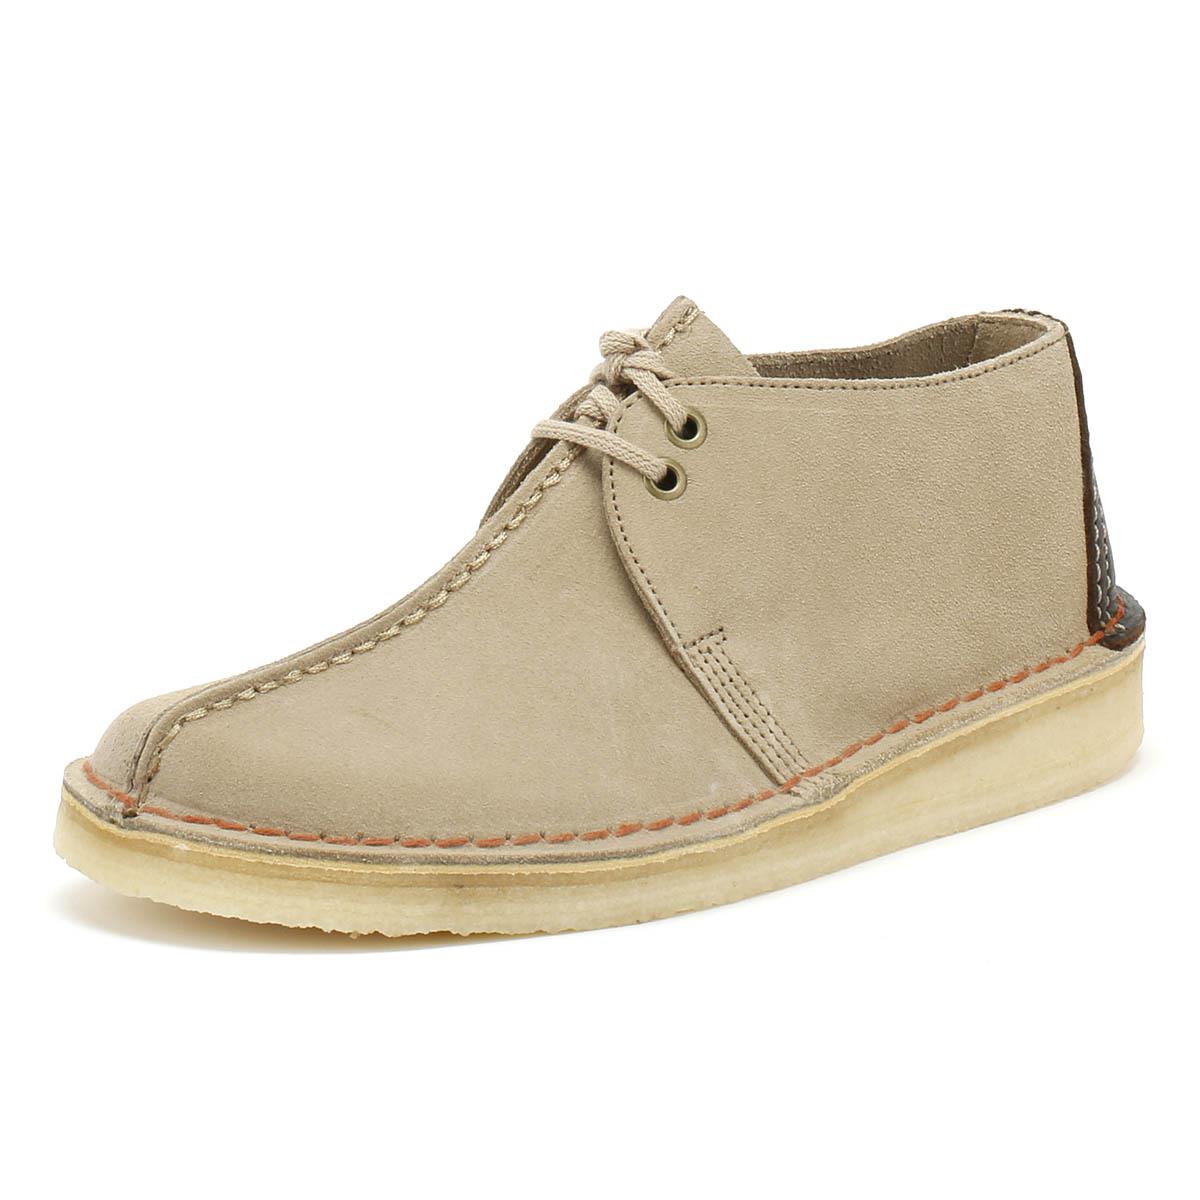 Clarks Desert Trek Mens Sand Suede Shoes in Beige (Natural) for Men - Lyst